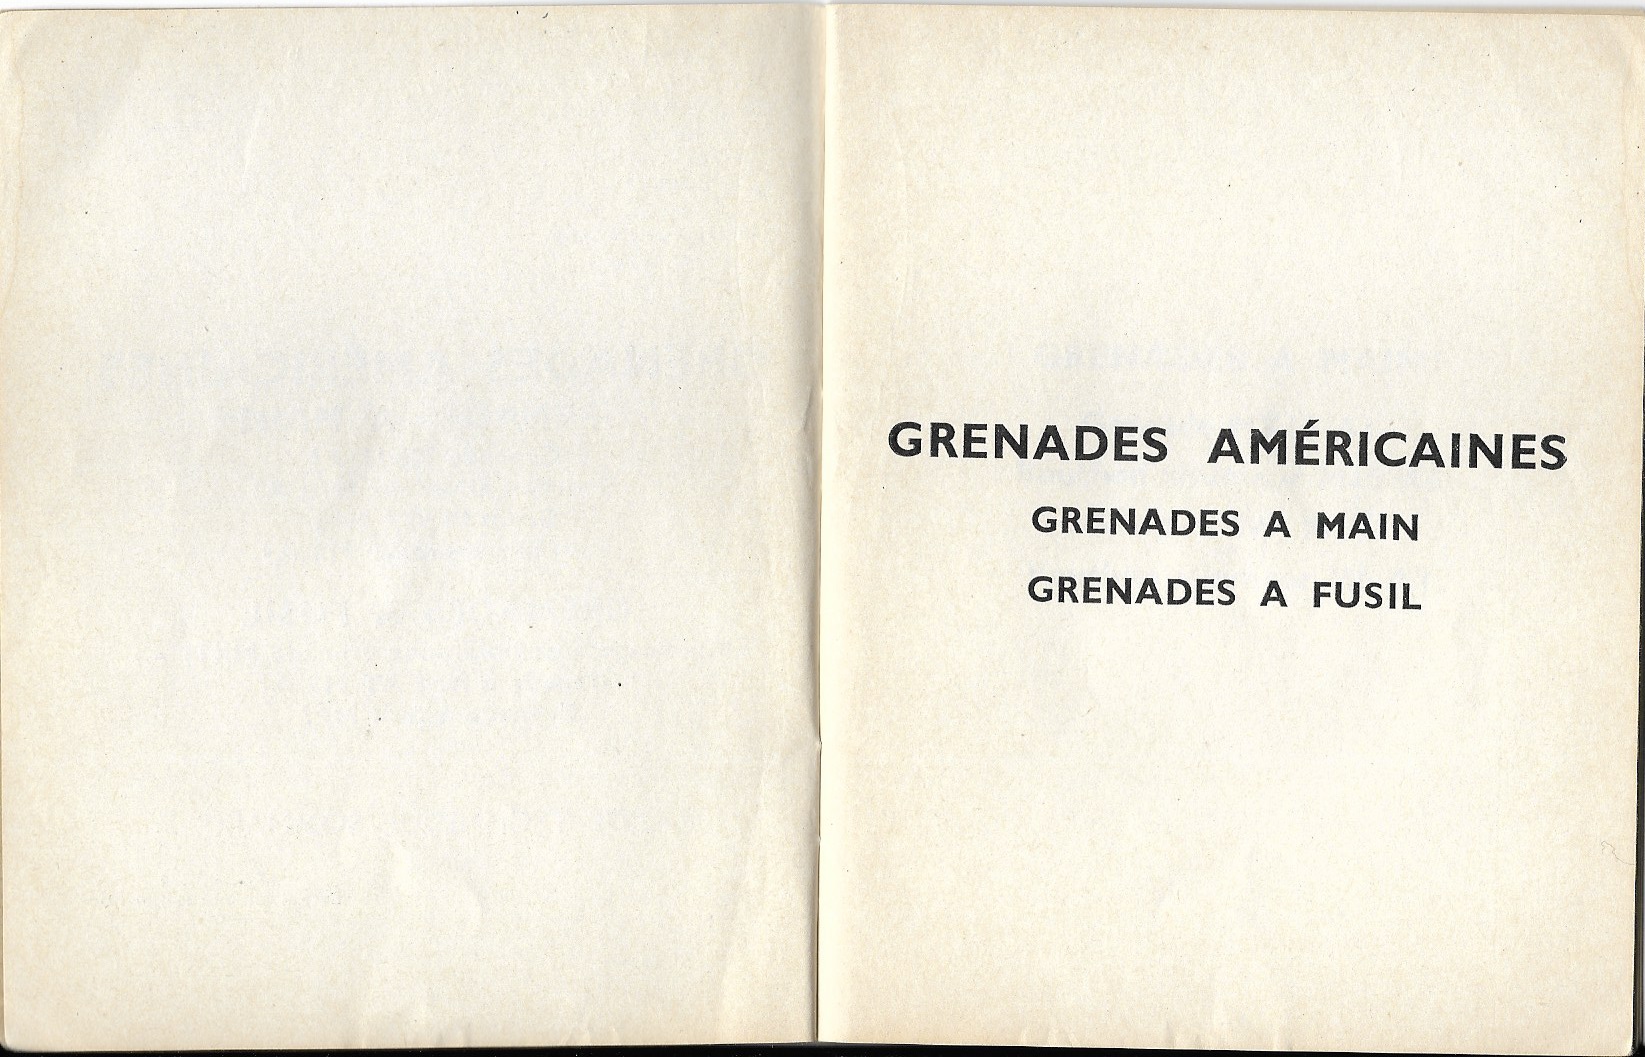 Grenades americaines 2